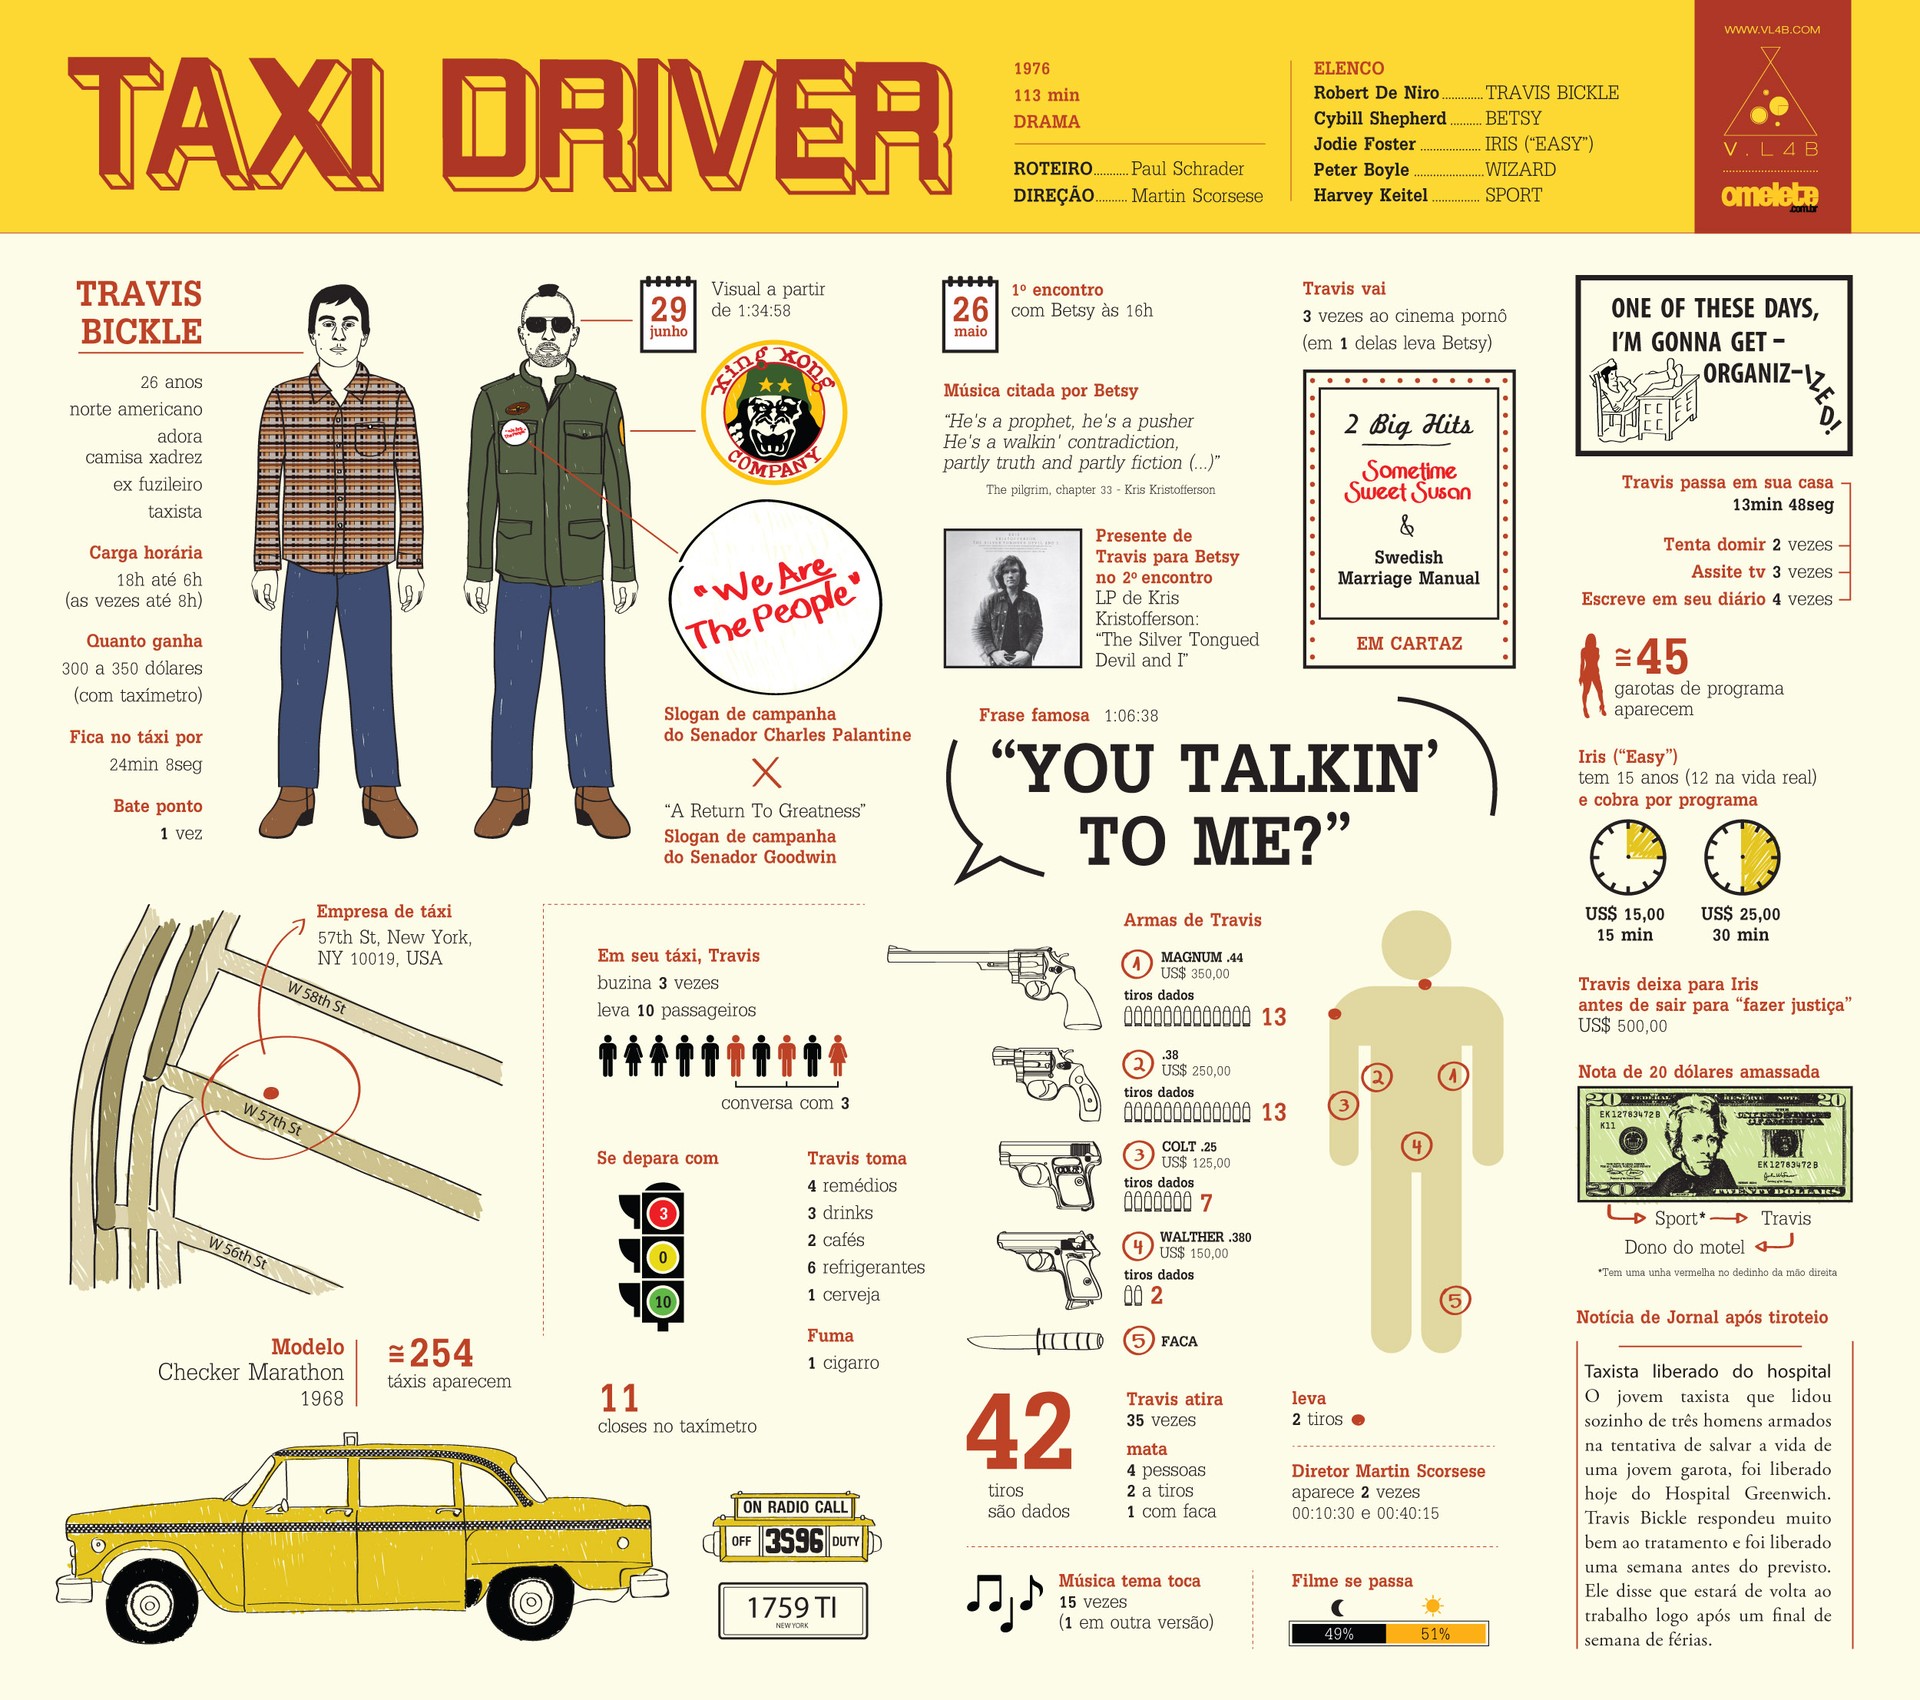 Taxi Driver (Foto: Vl4b)